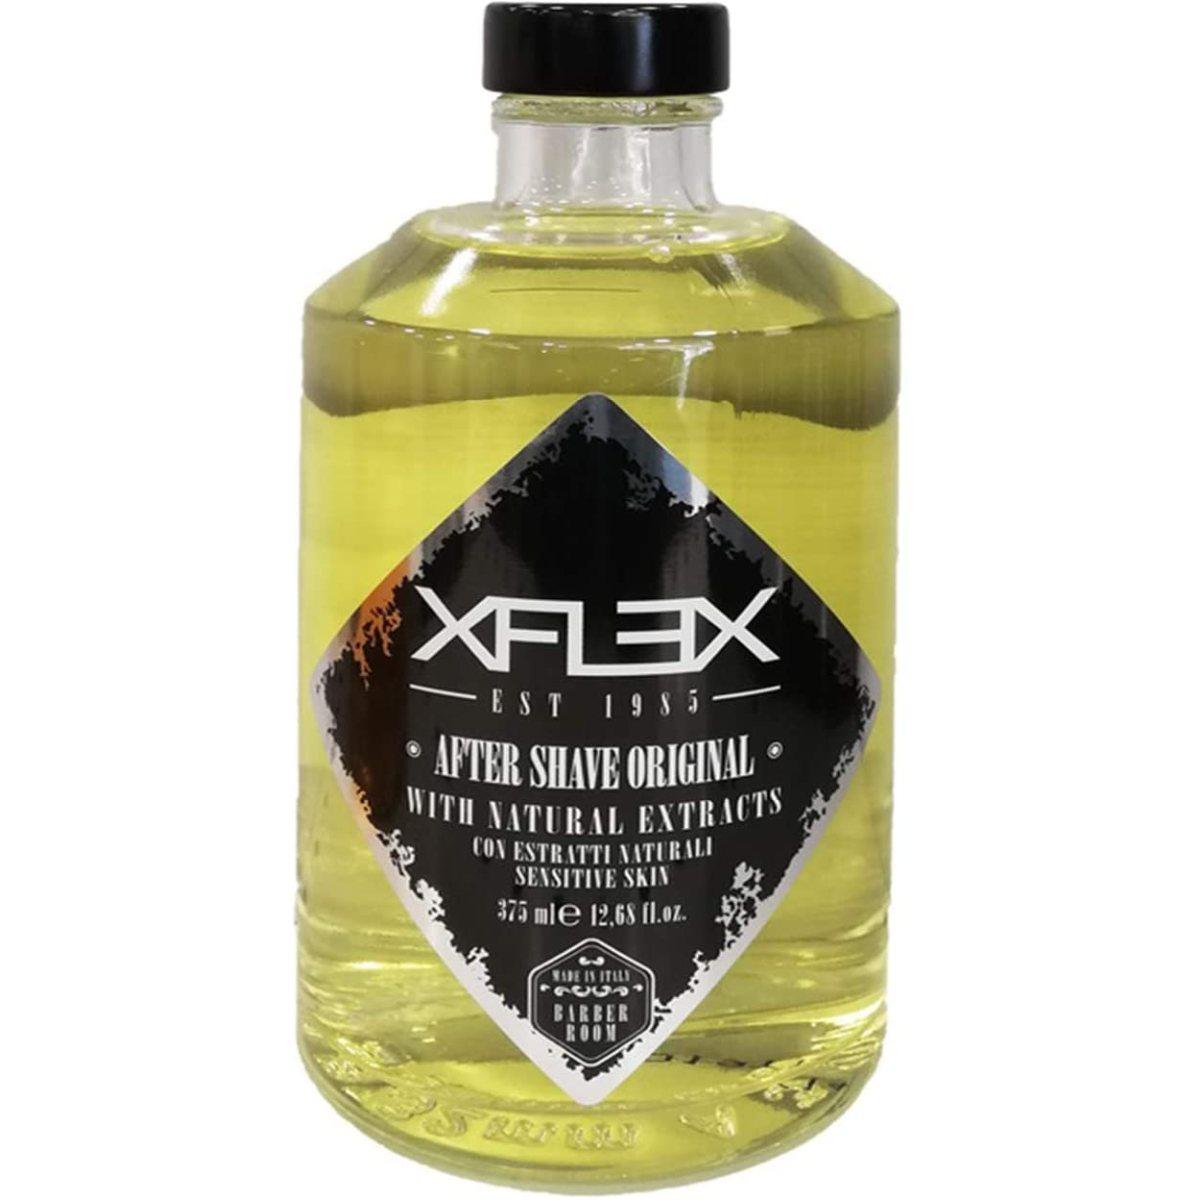 Xflex After Shave Original -  Estratti naturali pelle morbida 375 ml